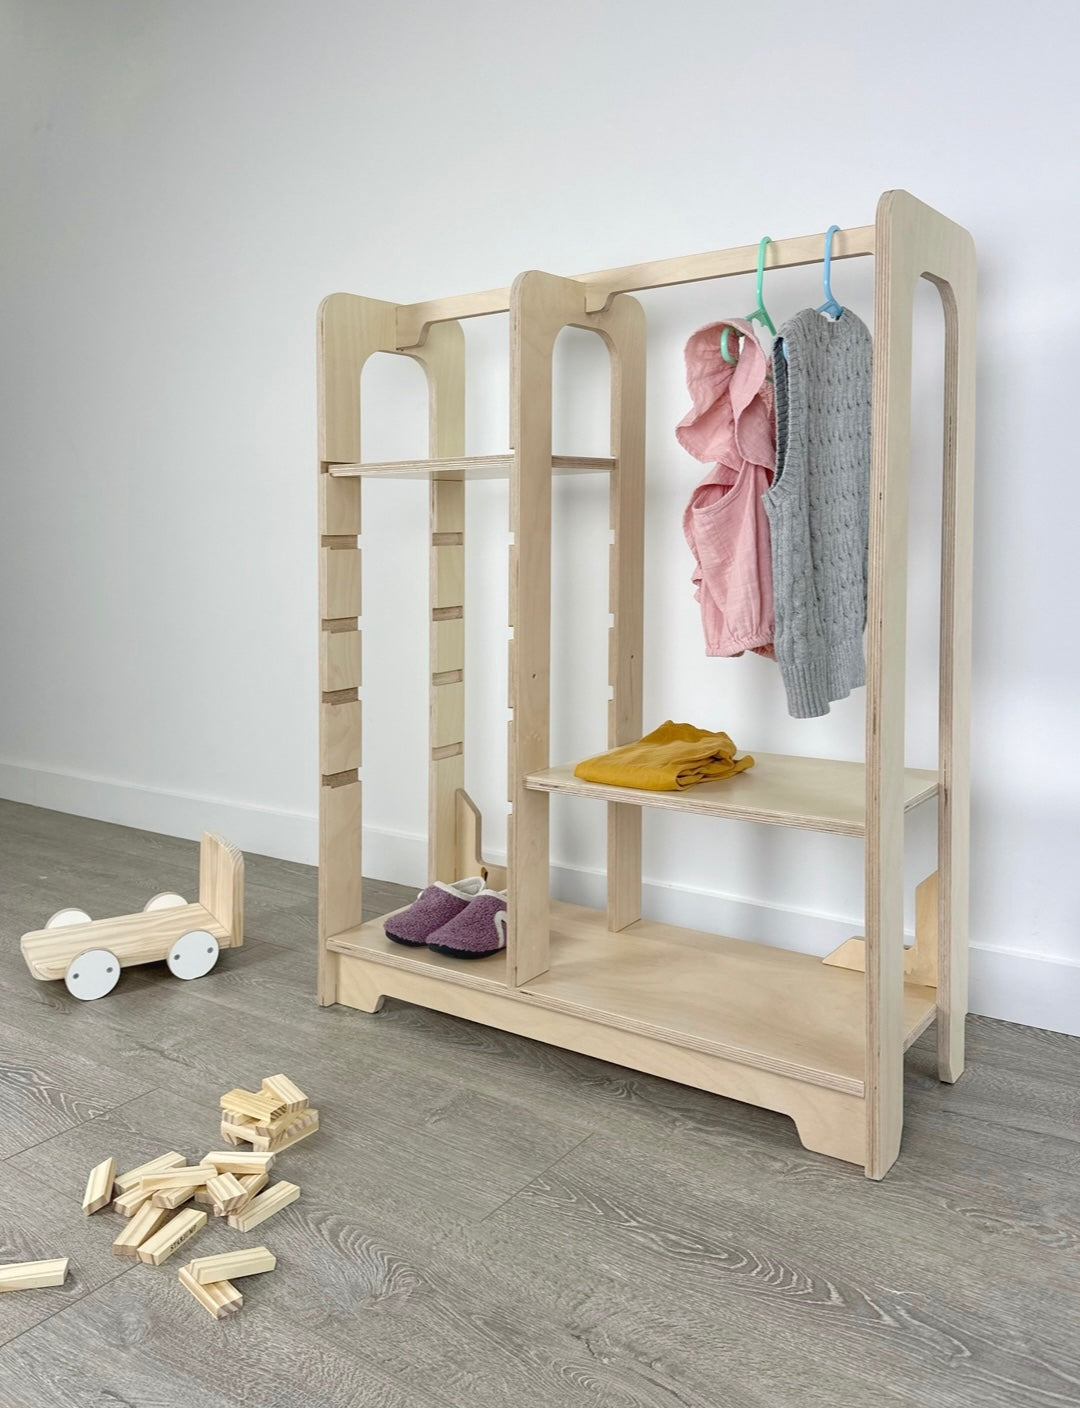 Empower little ones: Montessori-inspired wardrobe with adjustable shelves.